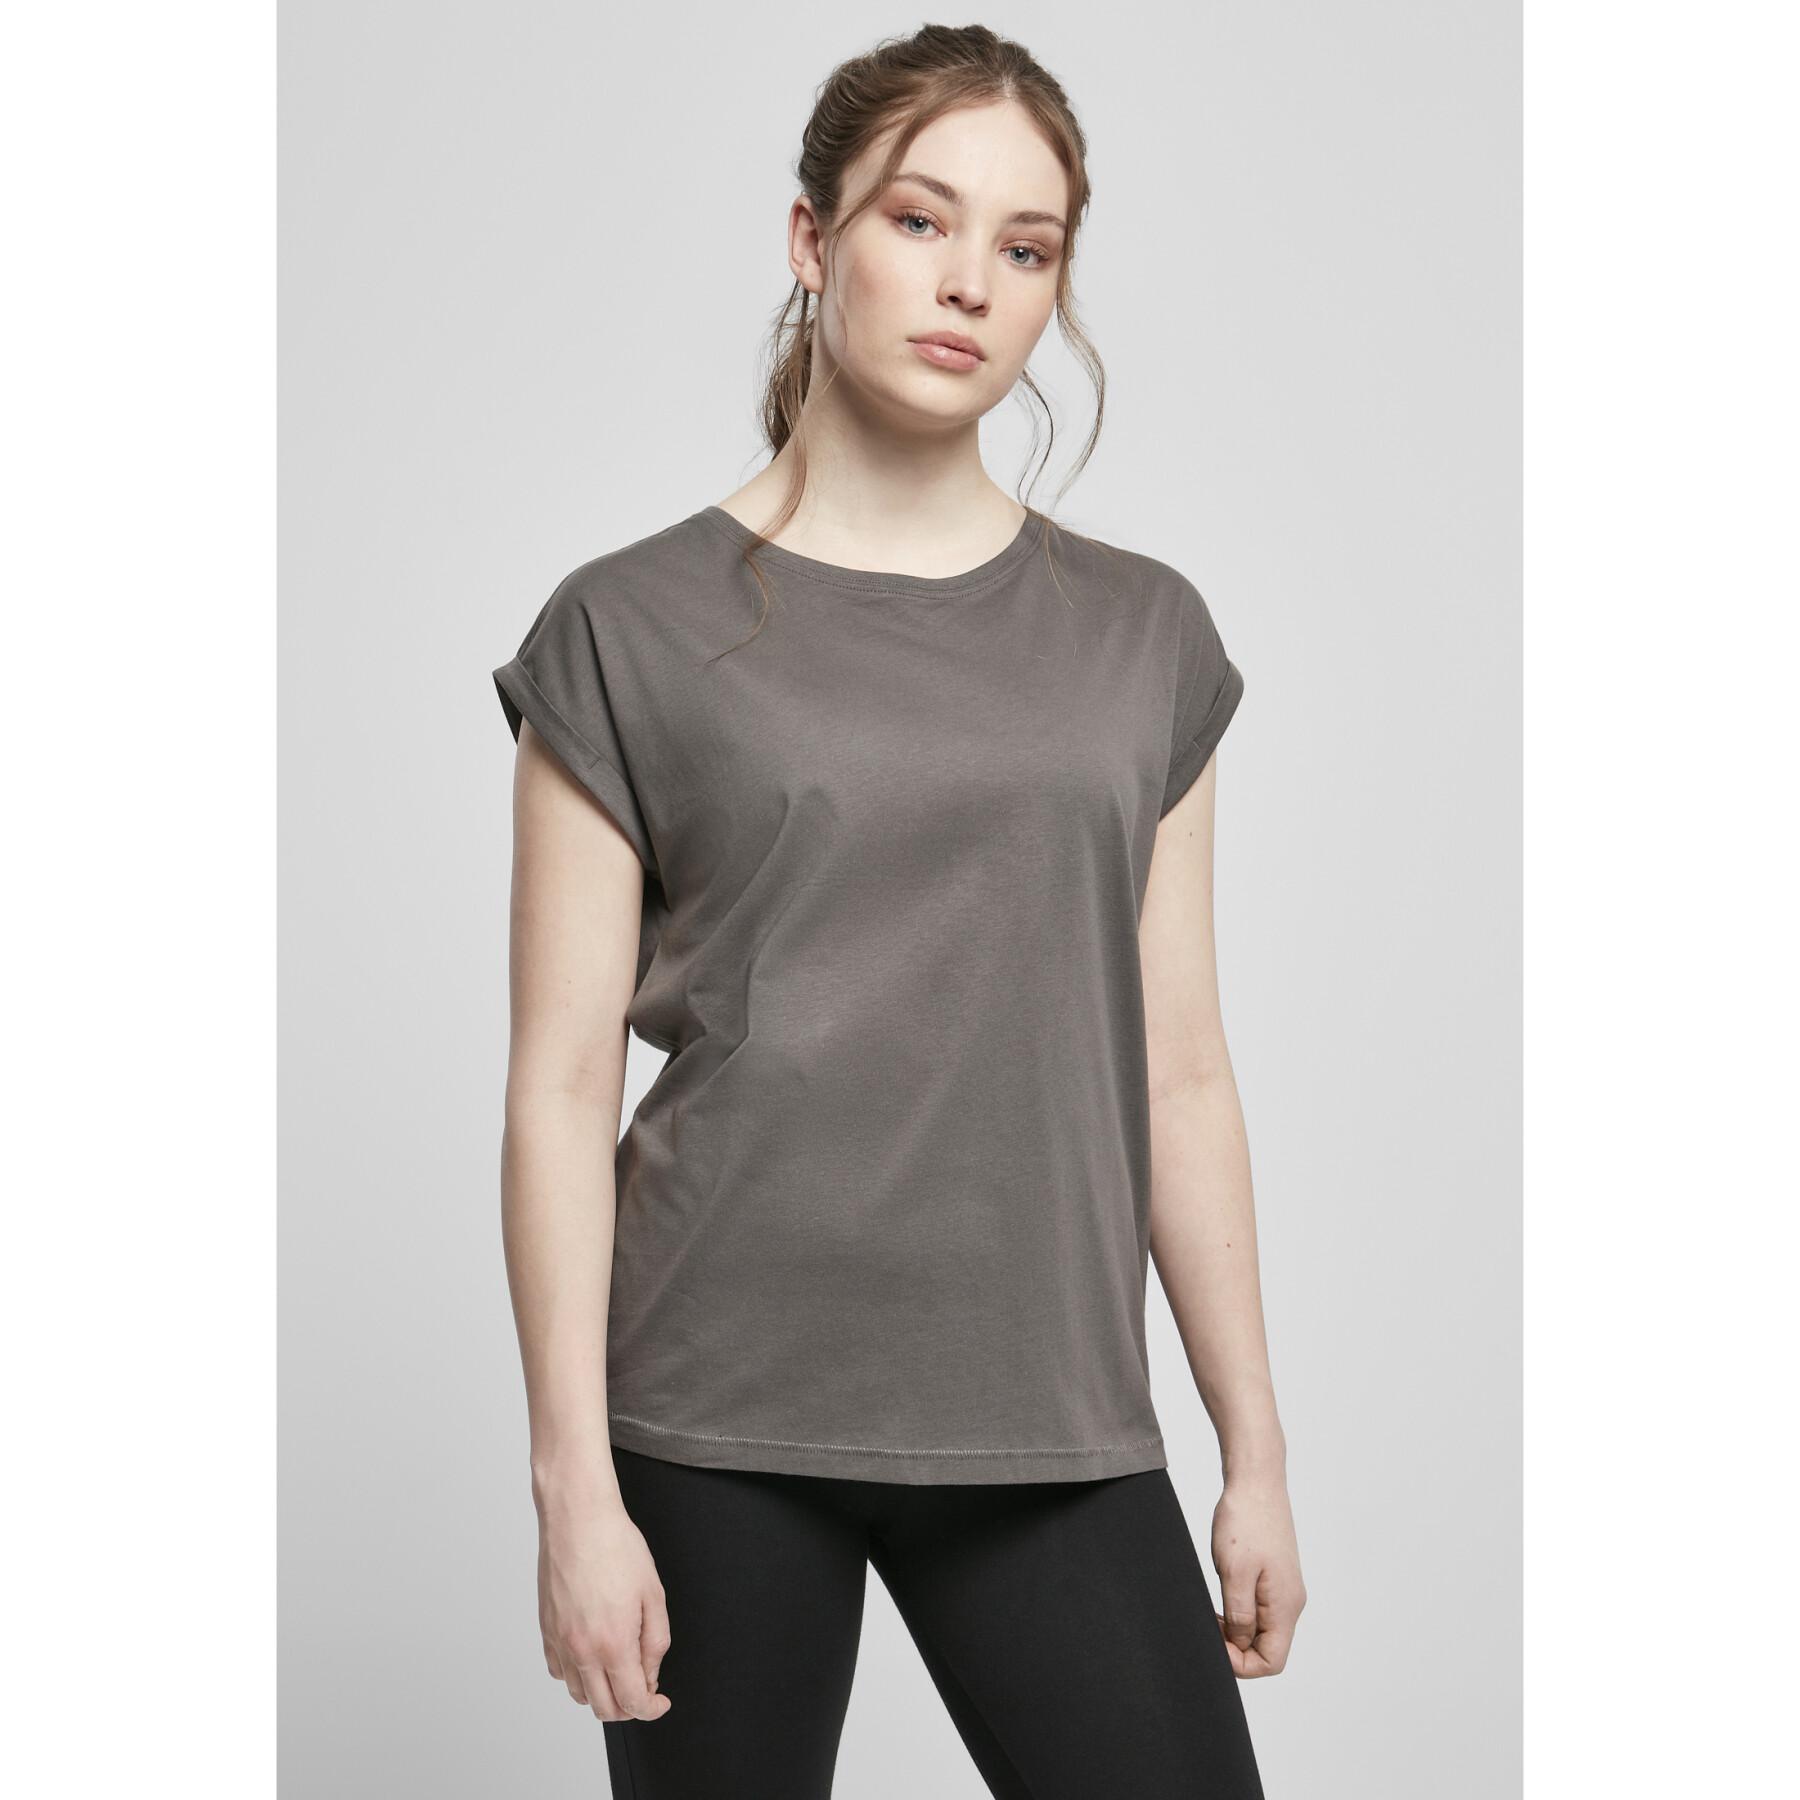 Women's T-shirt Urban Classics extended shoulder